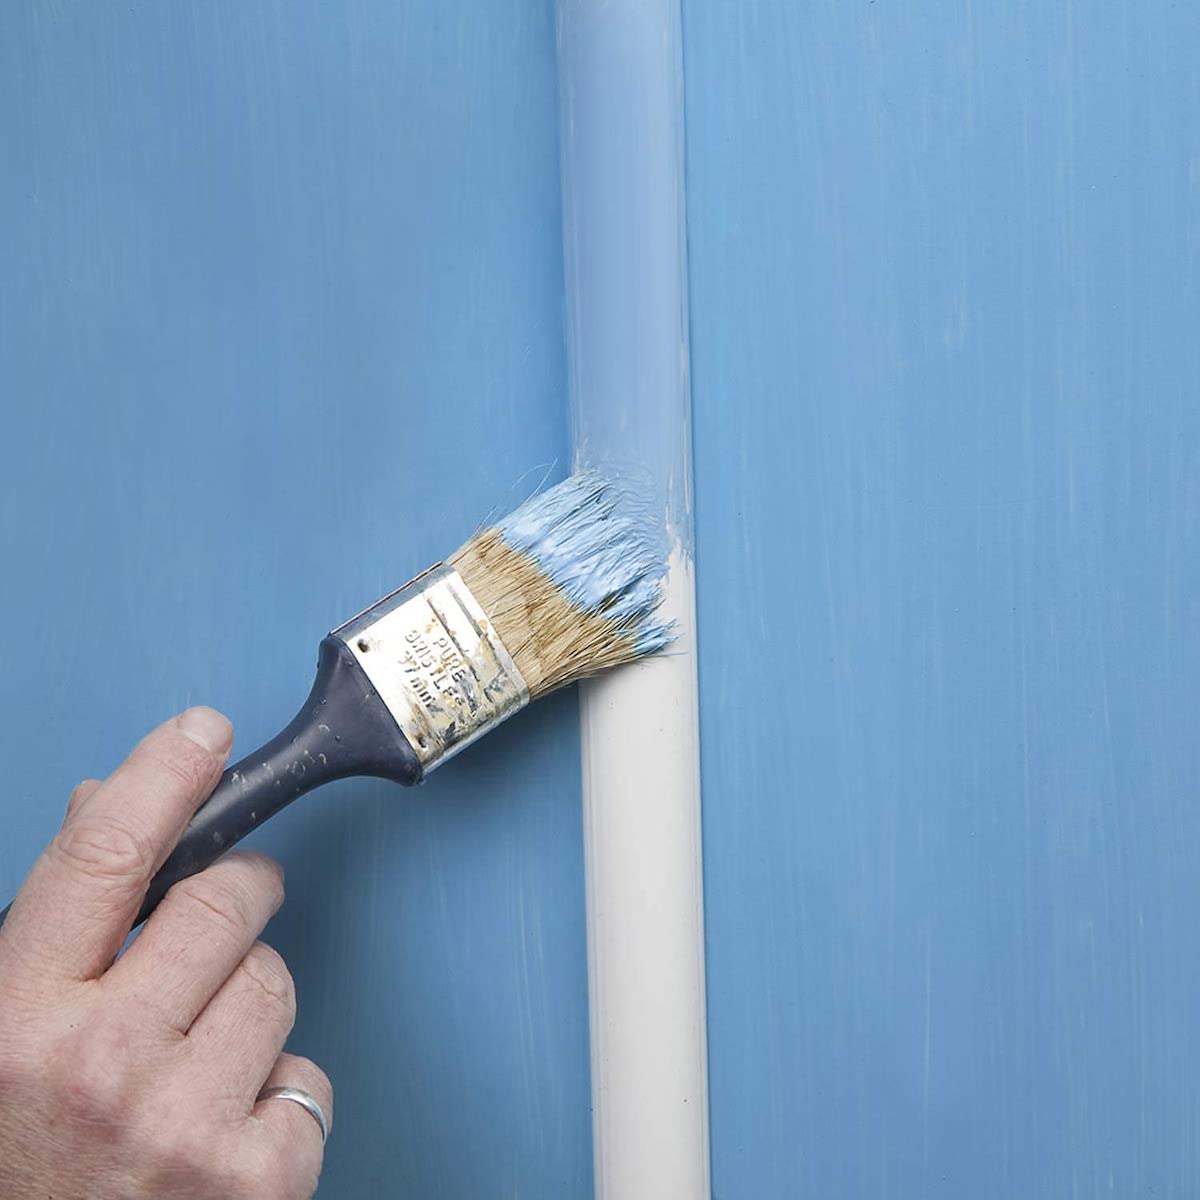 Person paints a white cable raceway light blue to match the light blue wall paint.